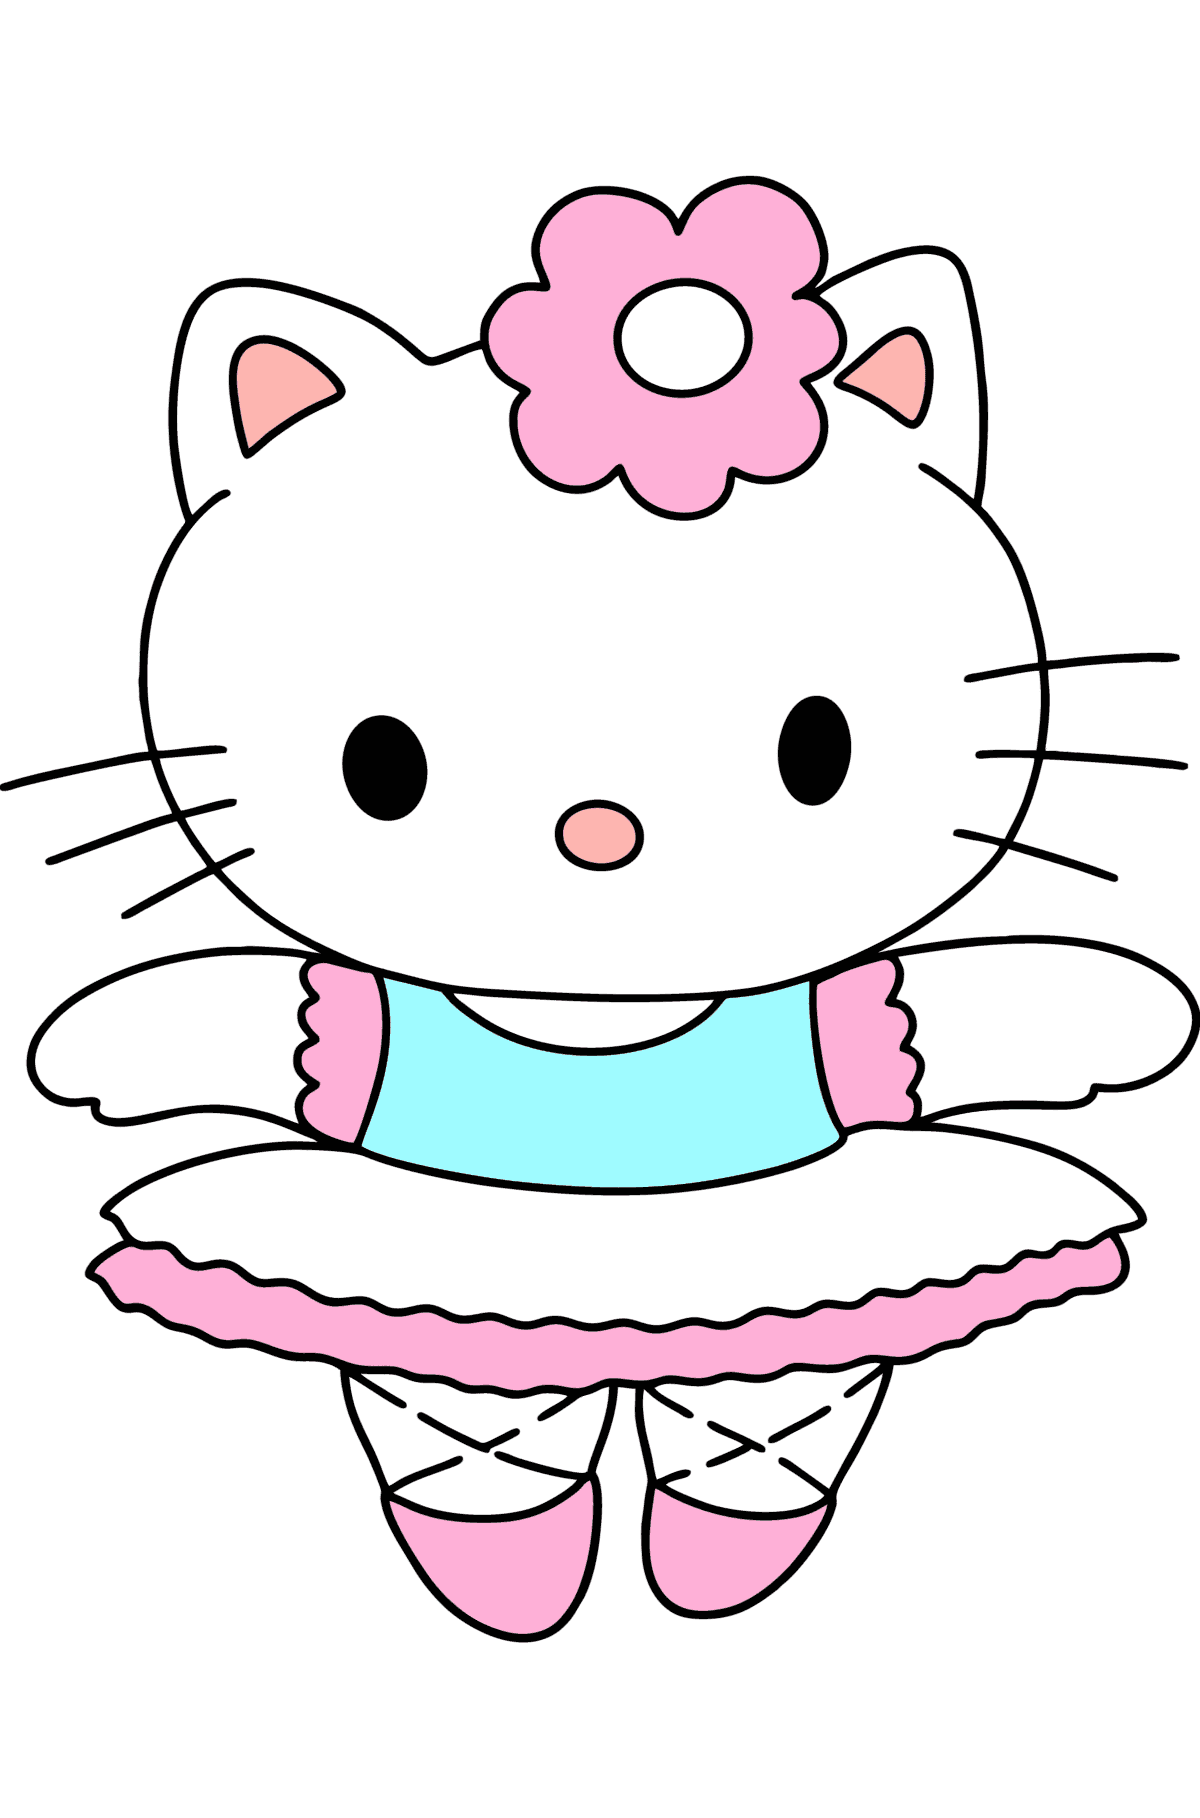 Desenho de Hello Kitty Ballerina para colorir - Imagens para Colorir para Crianças